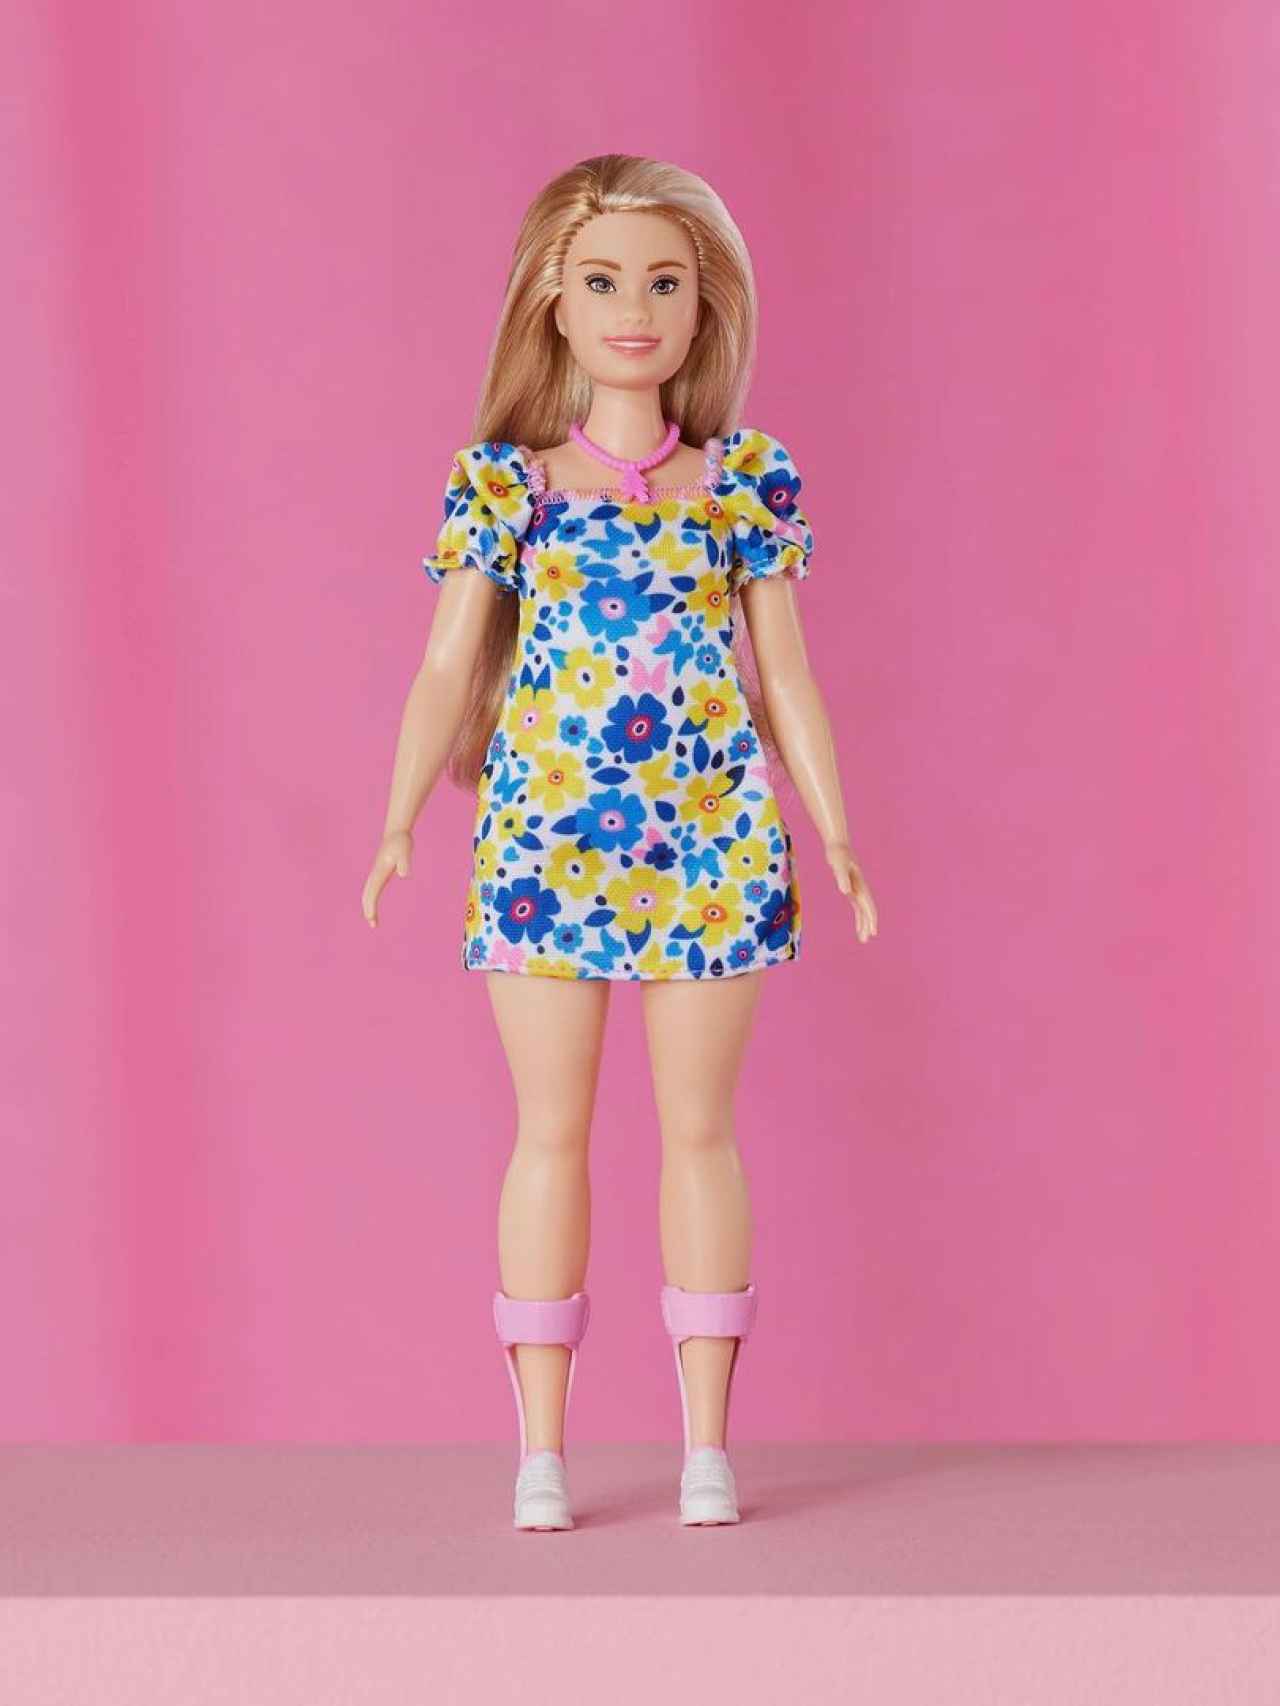 Barbie con Síndrome de Down.